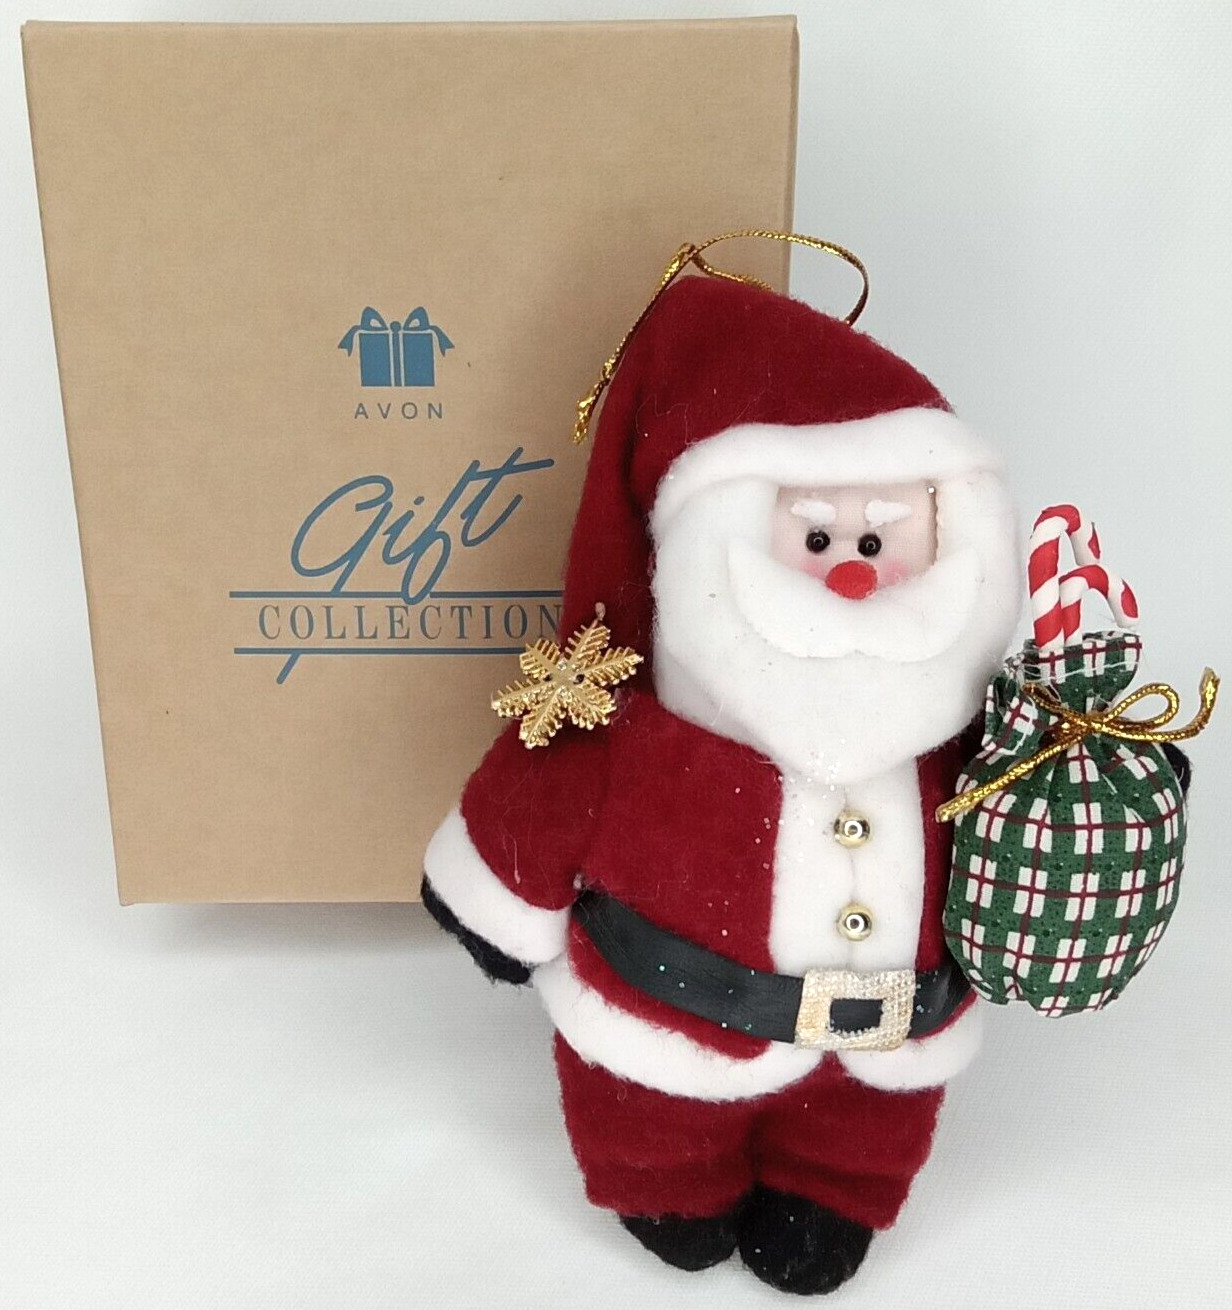 Christmas Ornament Santa Claus Avon Gift Collection Fabric & Box Holiday Decor